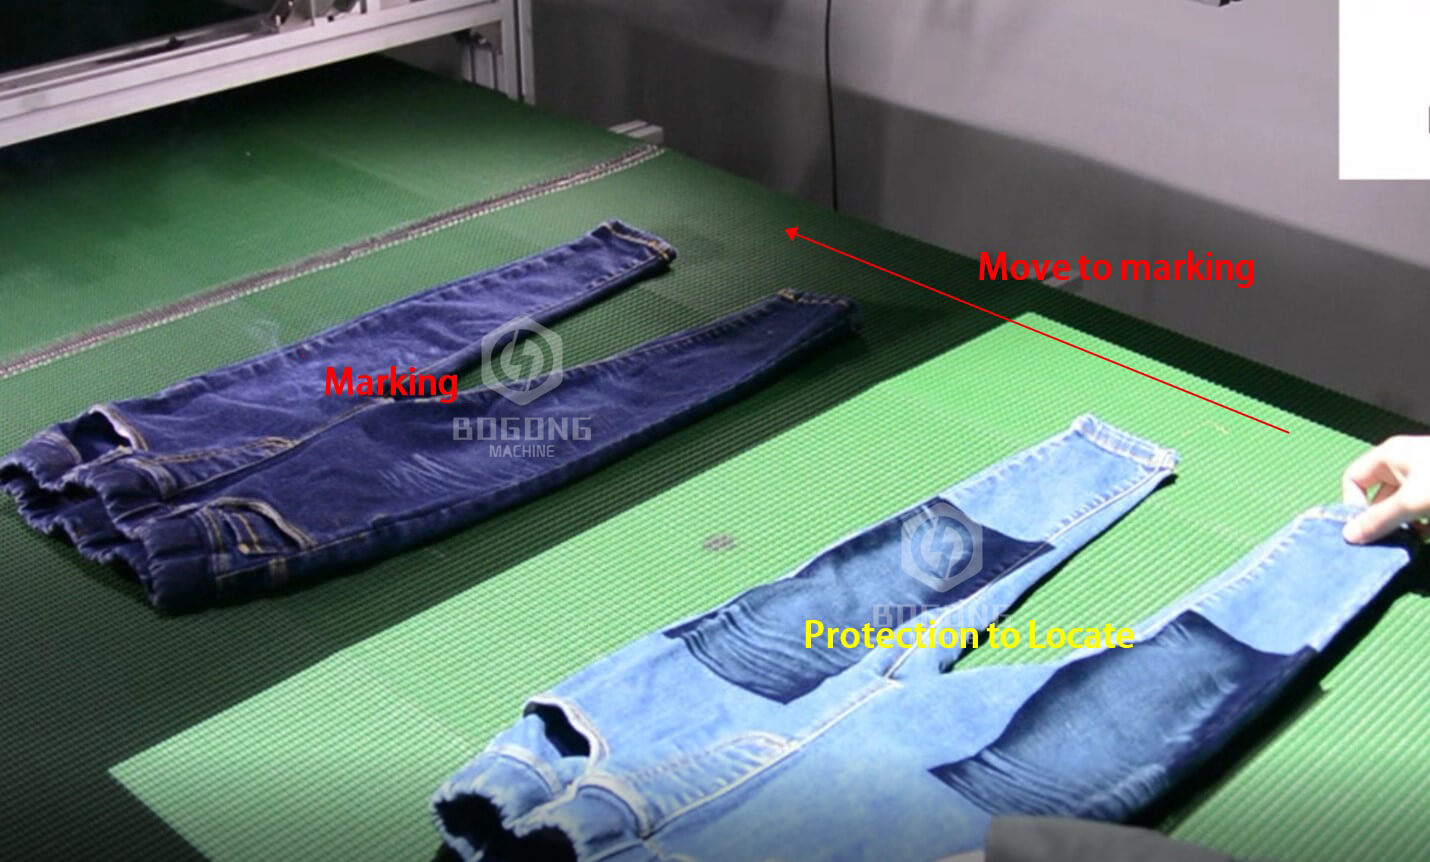 Protection to locate jeans laser engraving macine bogong.jpg